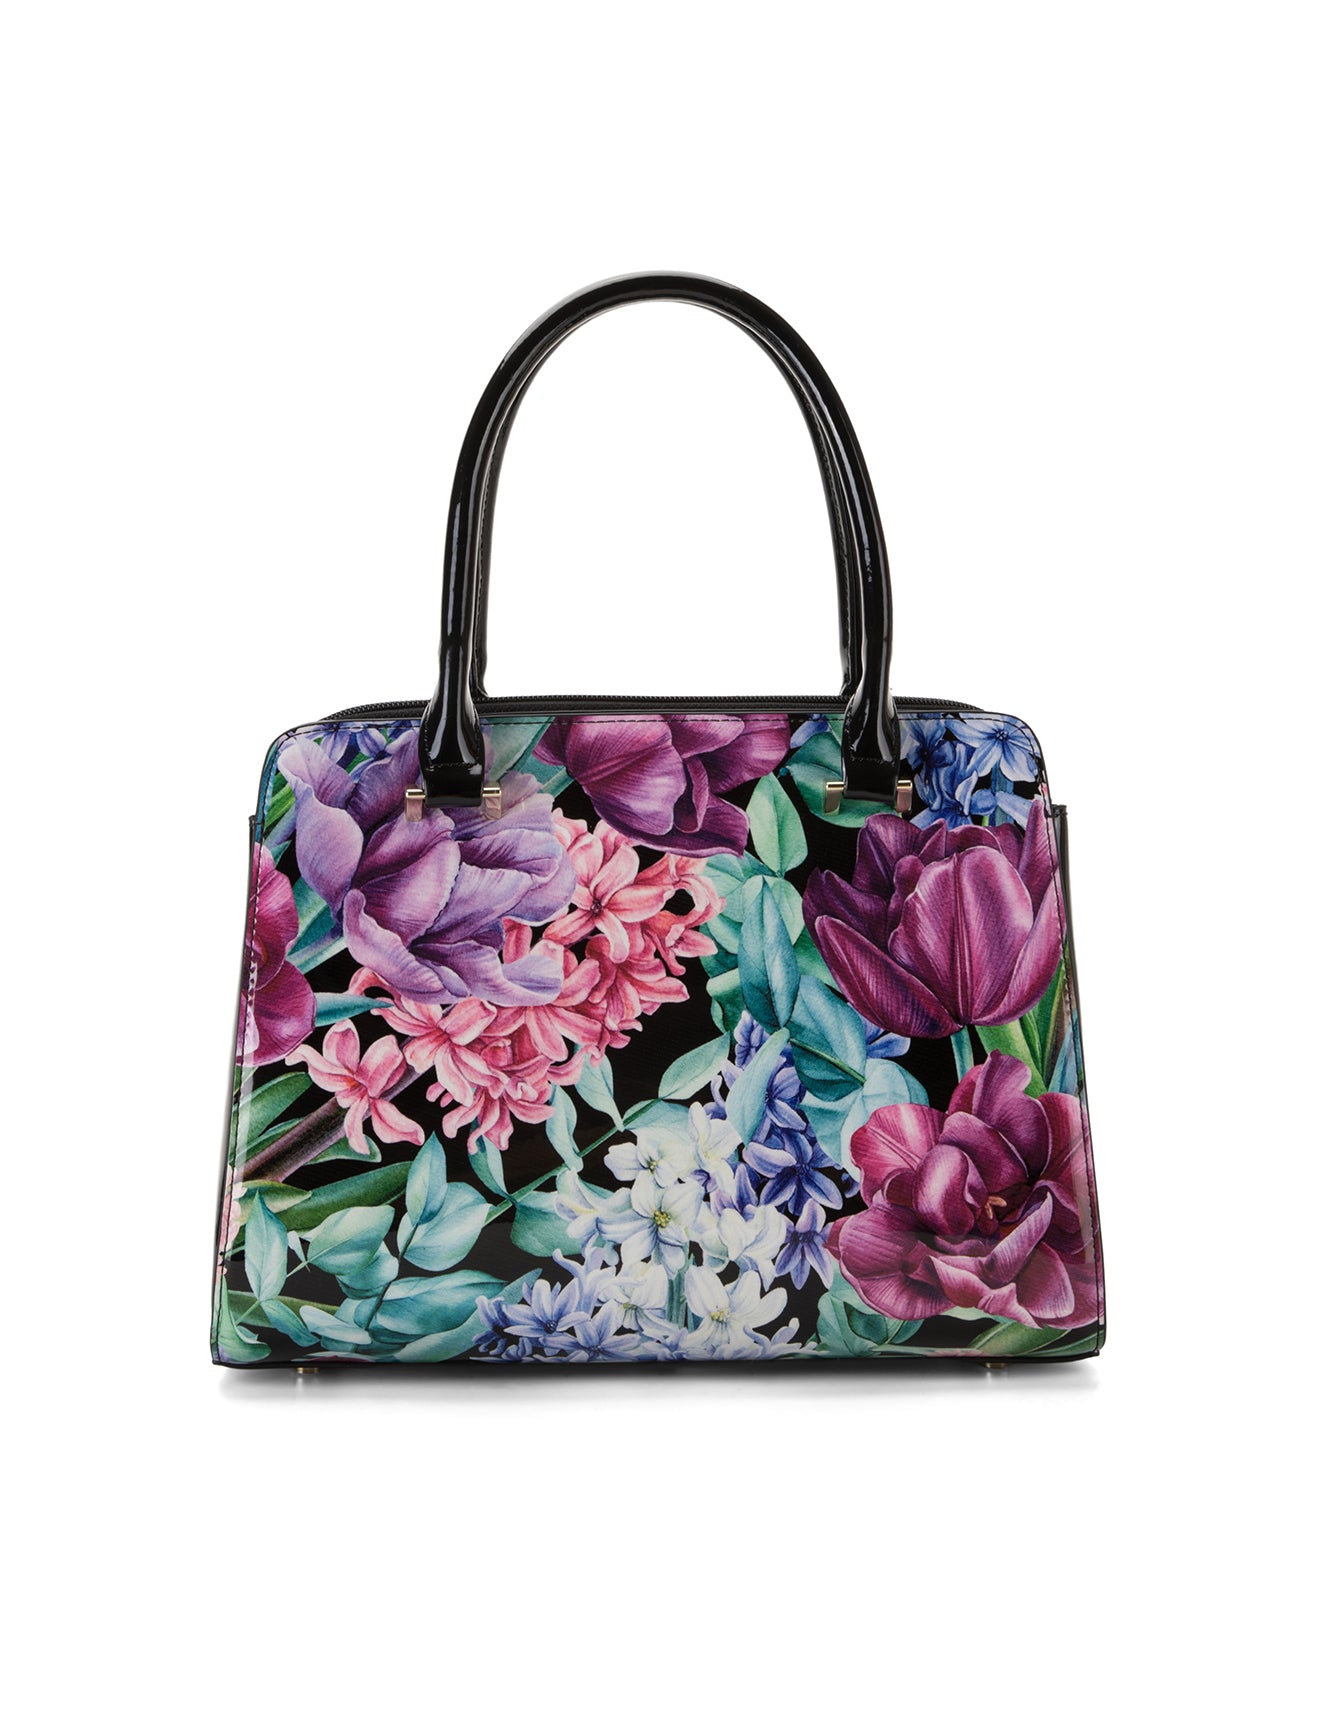 Serenade Hyacinth Leather Grip Handle Bag